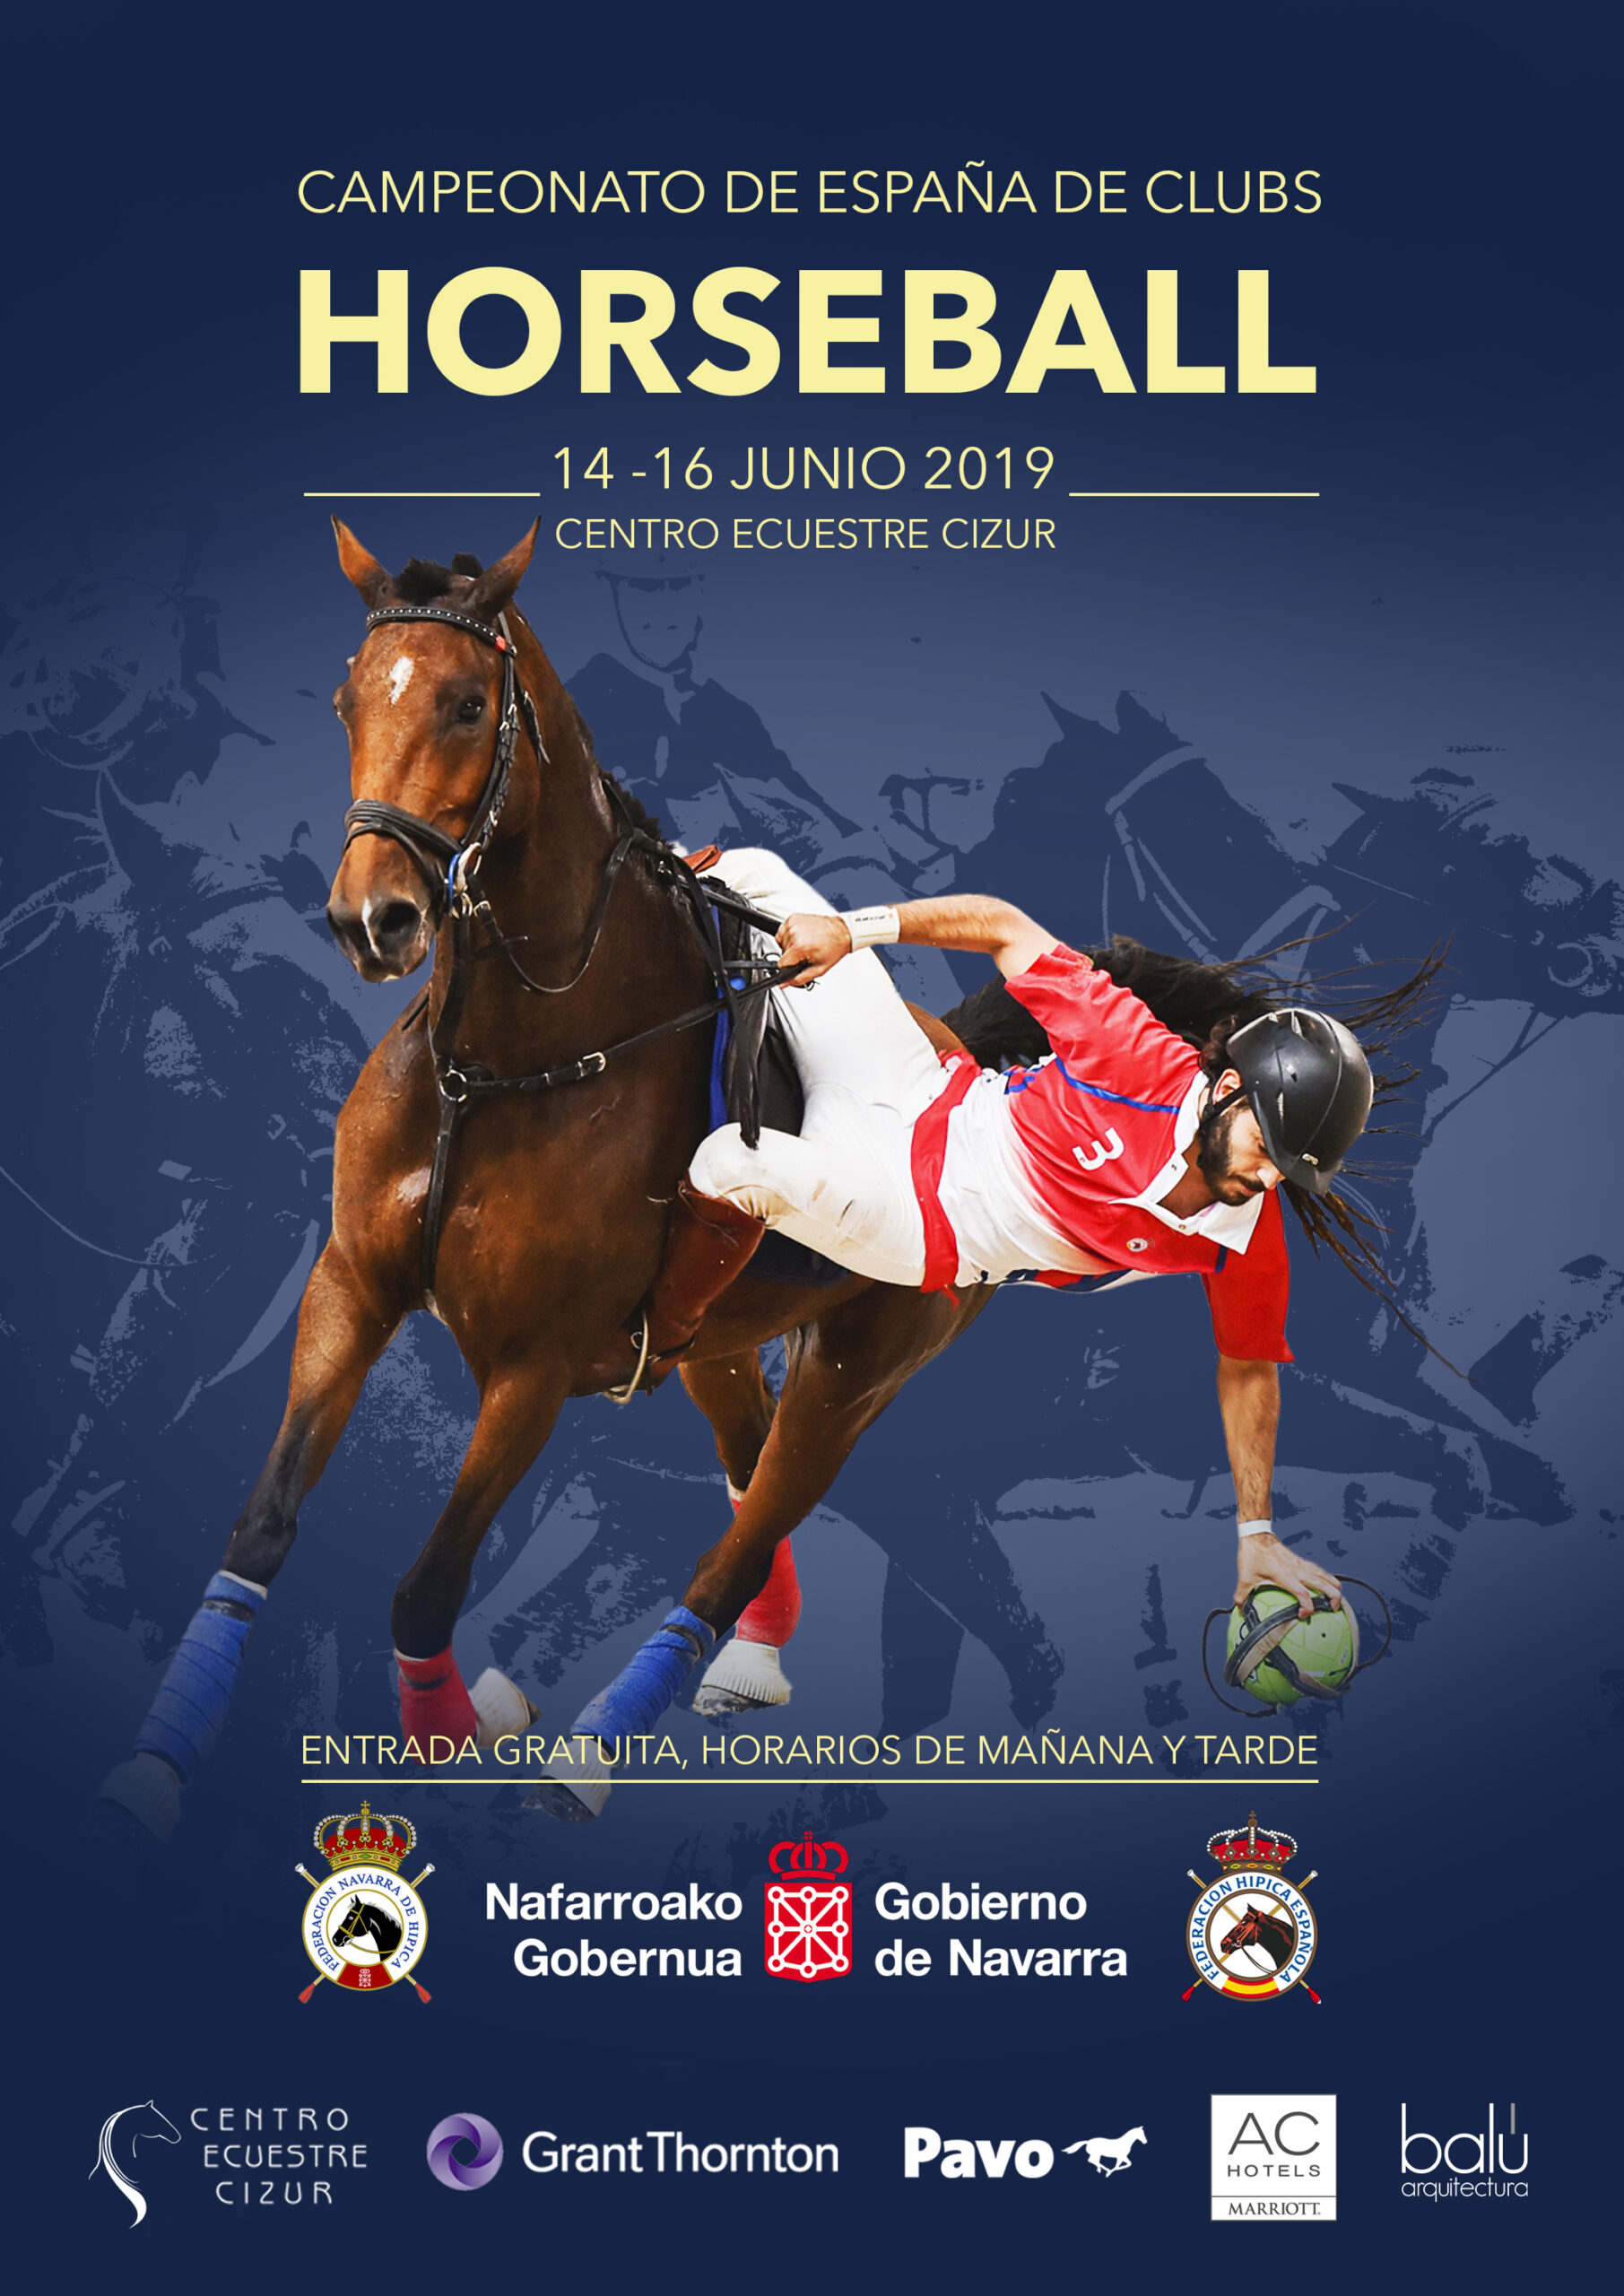 Campeonato de España de Clubes de Horseball categorías absoluto mixto, femenino y sub16